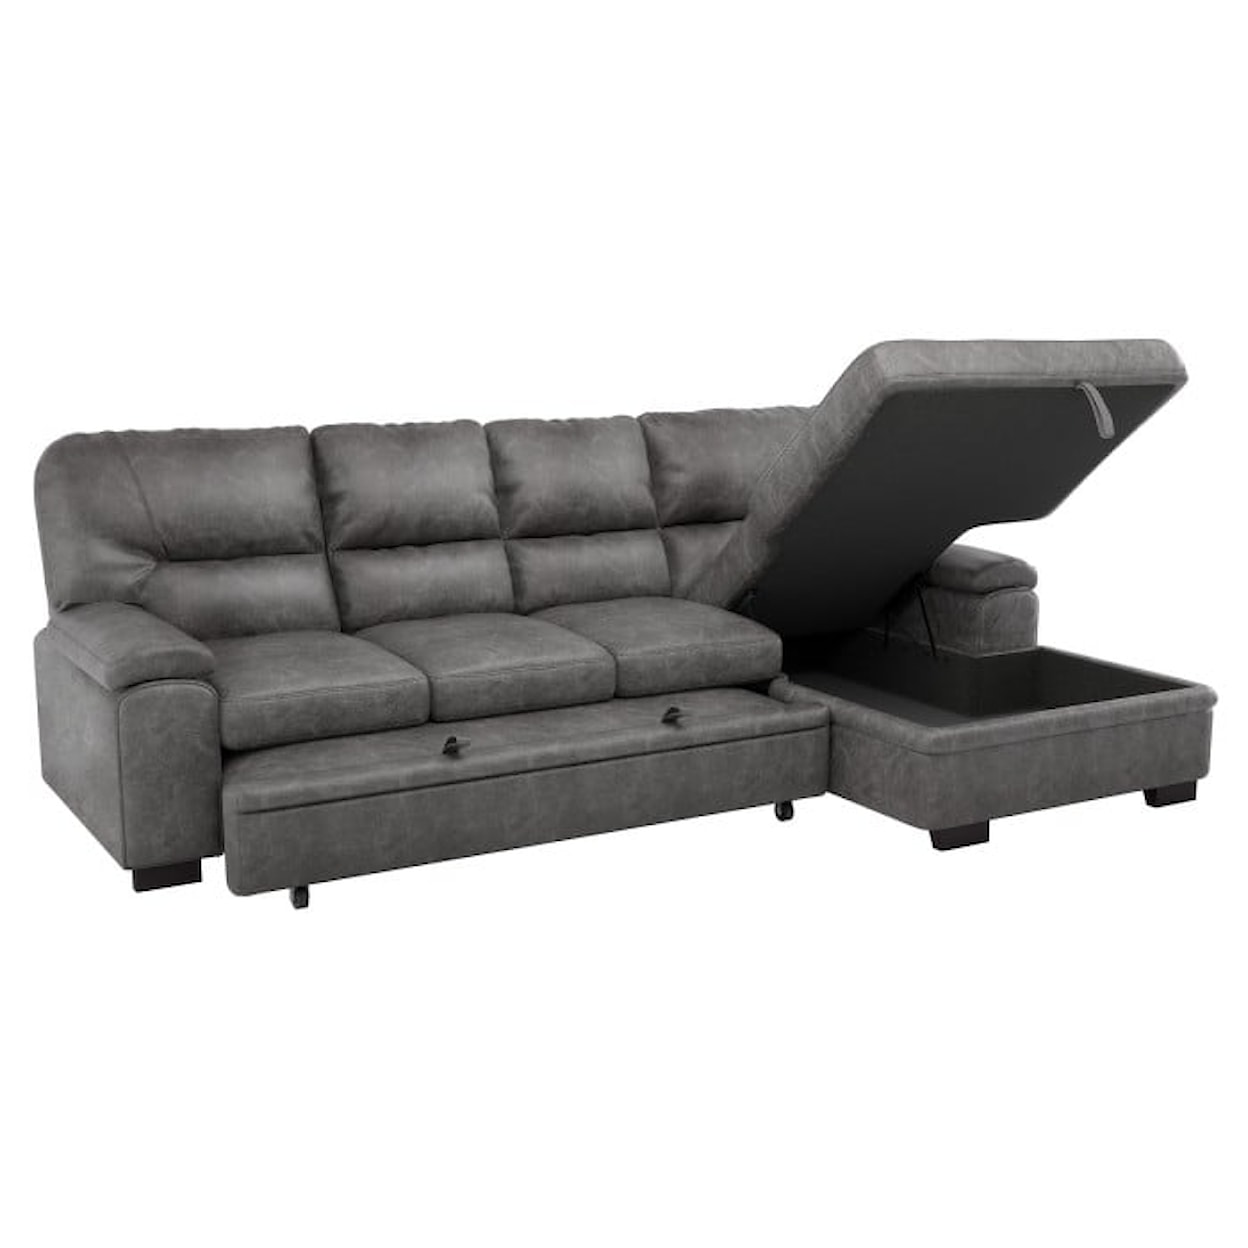 Homelegance Michigan 2-Piece Sectional Sofa